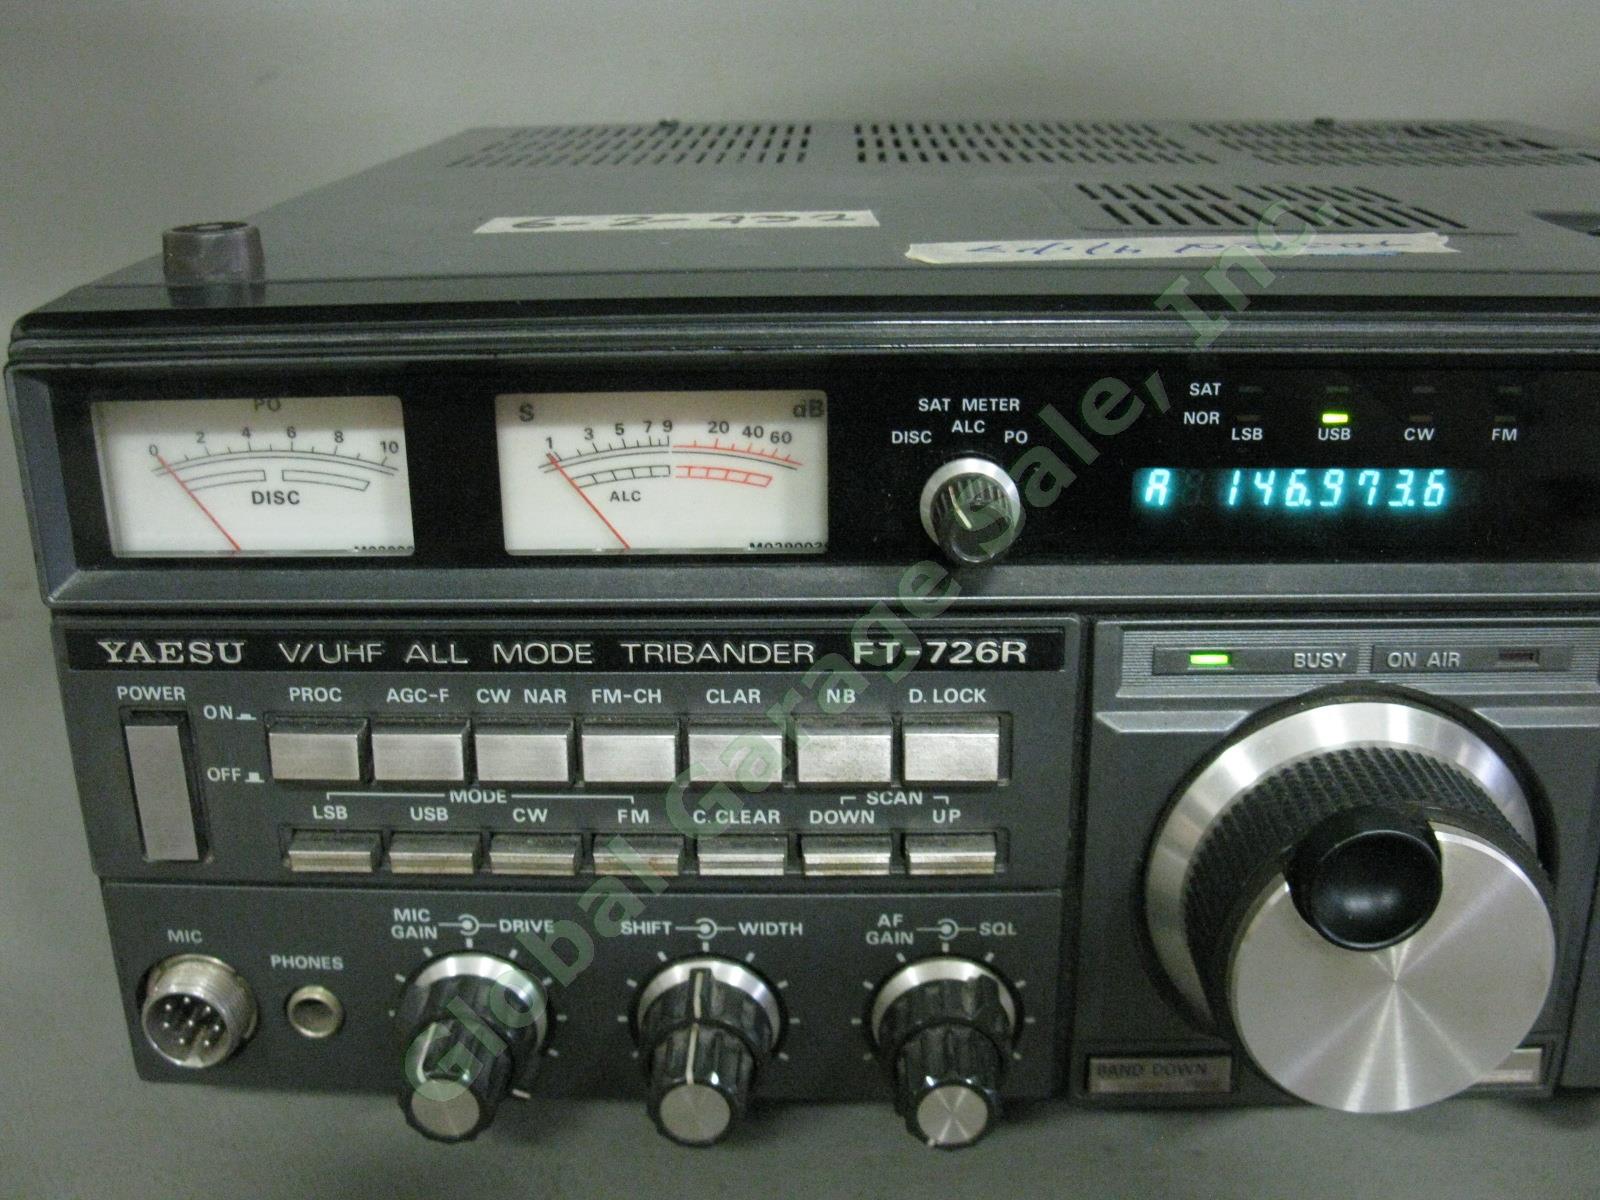 Yaesu FT-726R V/UHF All Mode Tribander Ham Radio Transceiver + YM-48 Mic Tested+ 2